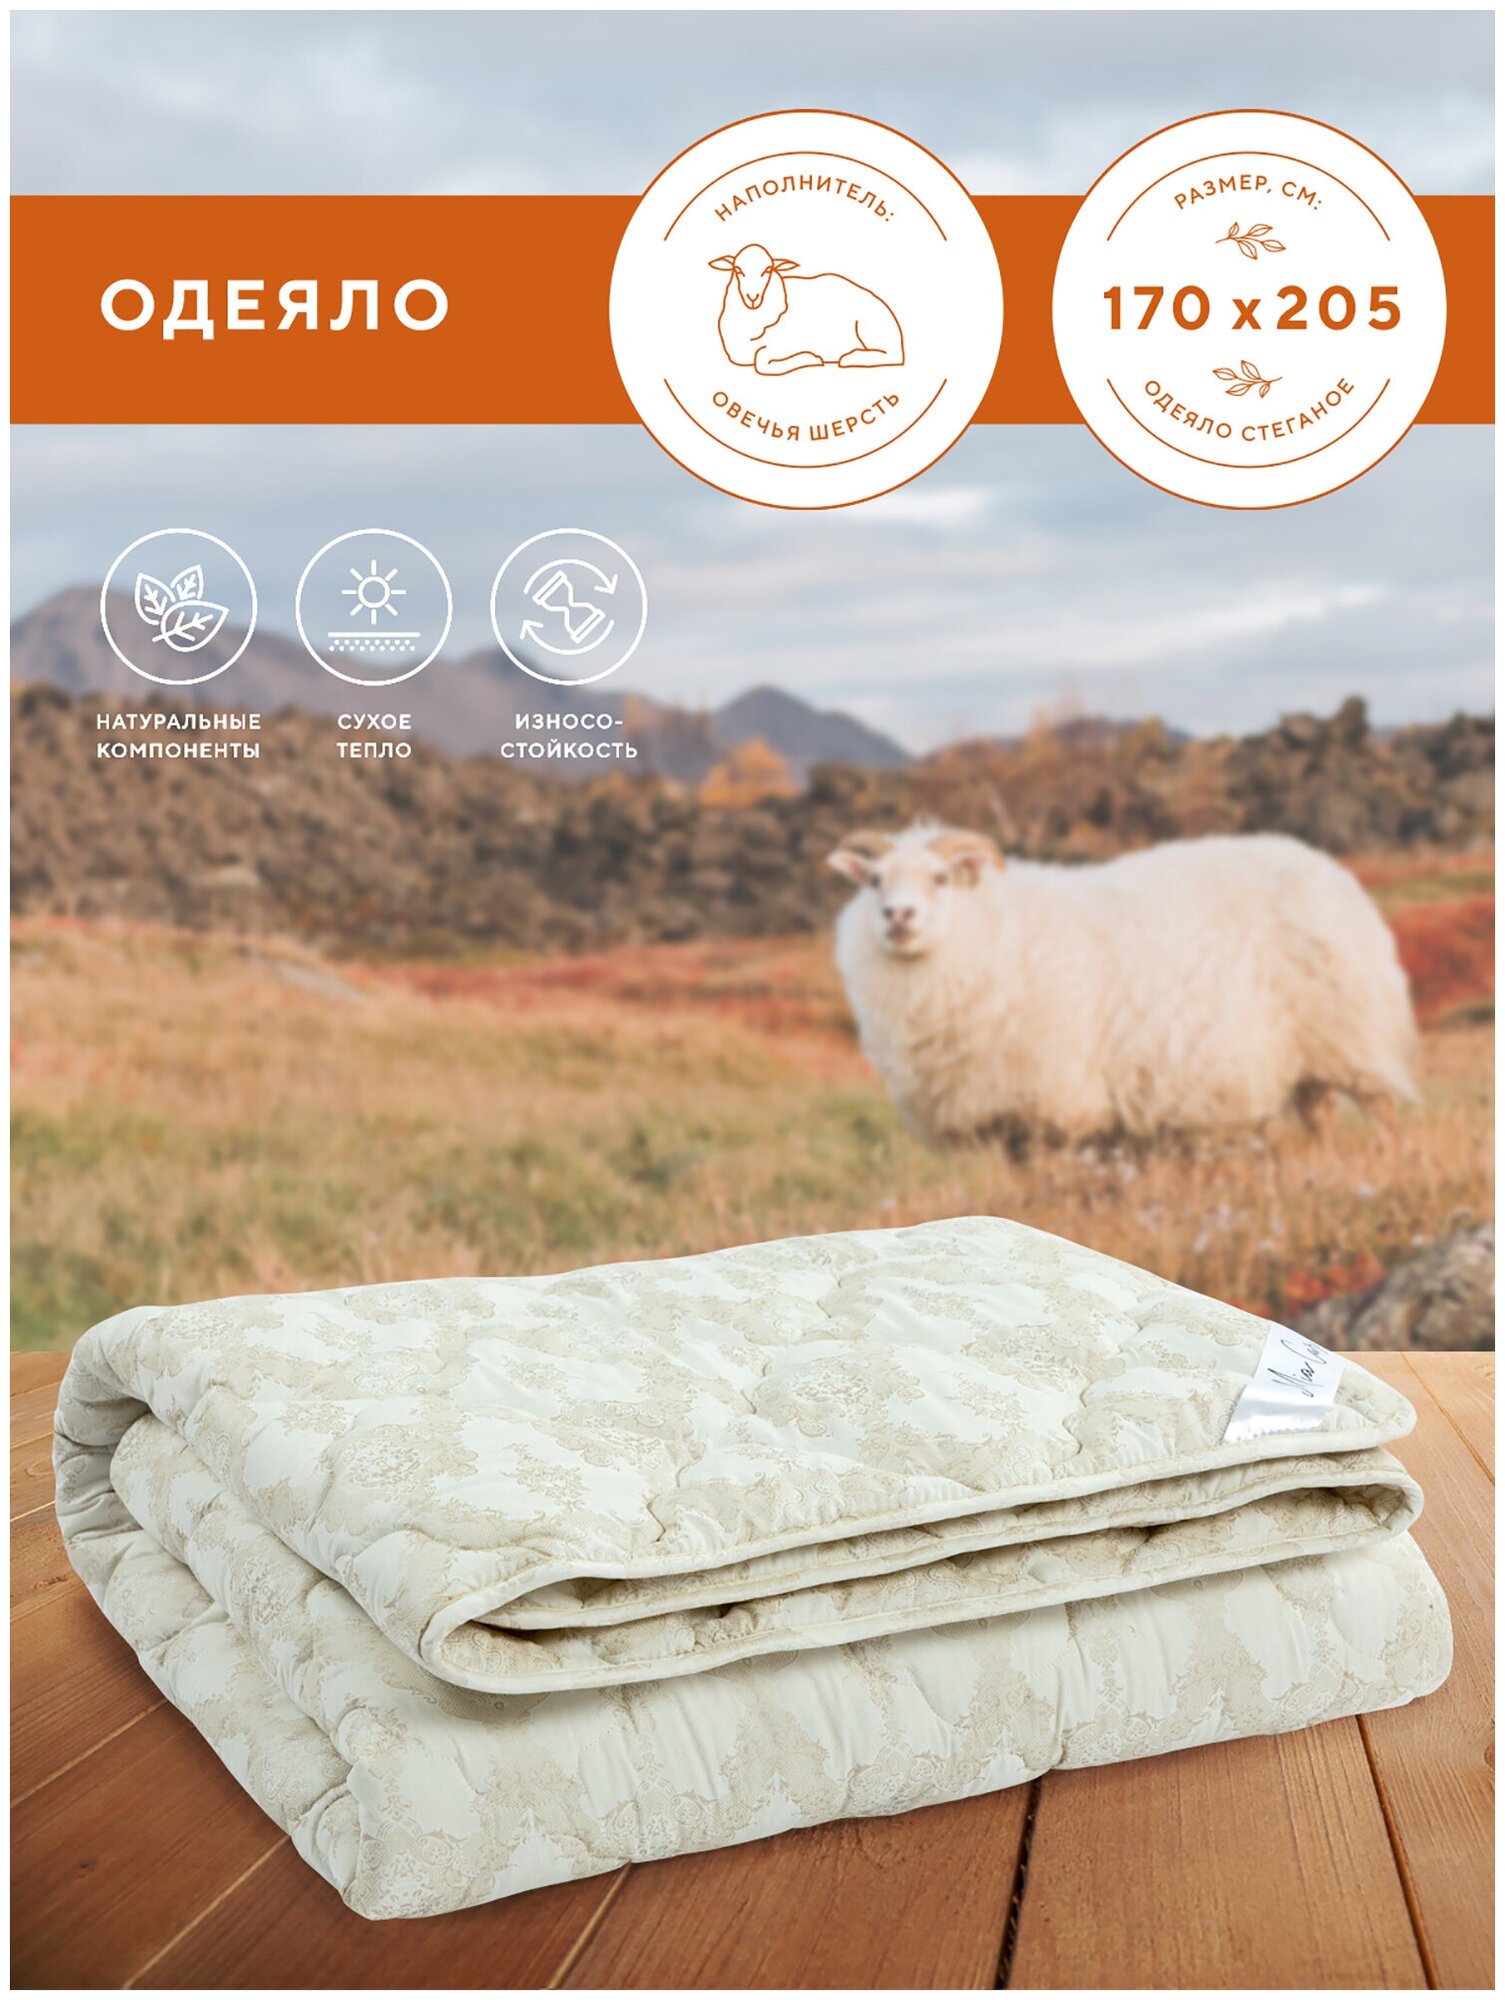 Одеяло / одеяло зимнее / летнее одеяло / одеяло евро летнее / одеяло зимнее / одеяло шерстяное "Mia Cara" balance 170х205 овечья шерсть рис. 0020